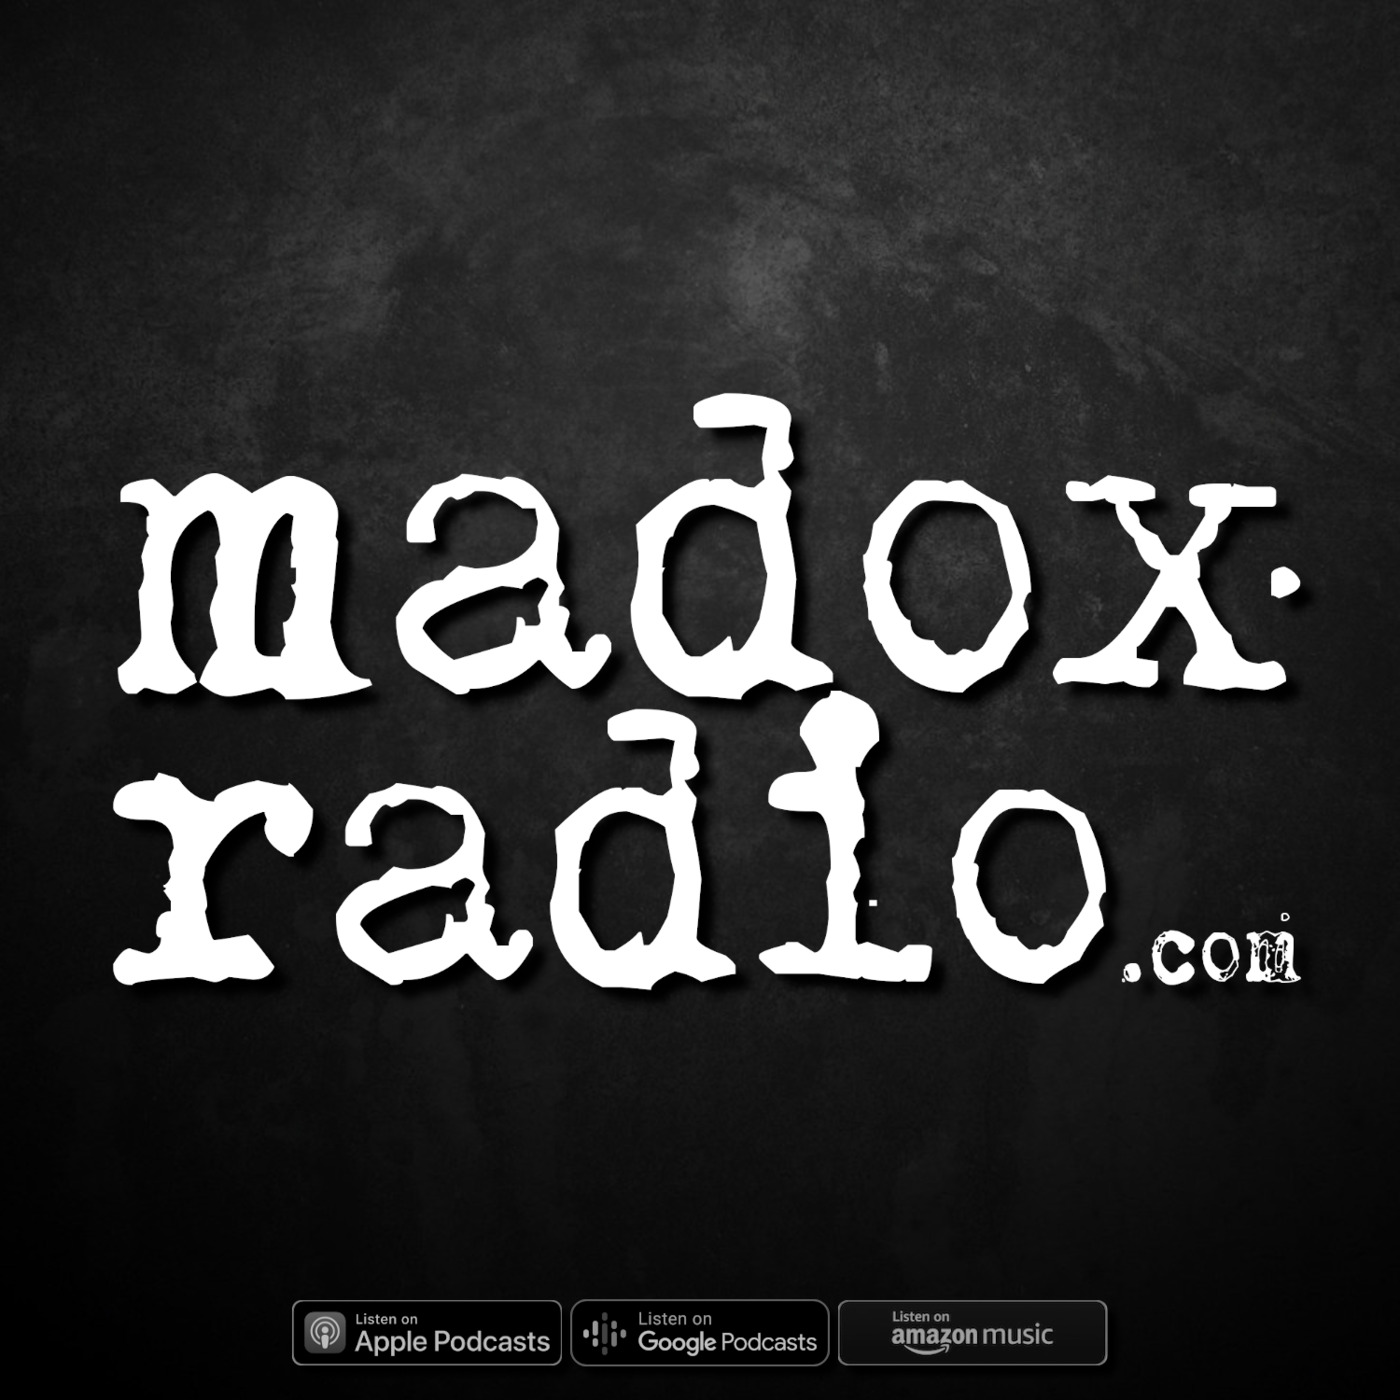 madox radio 012 [05.08.2021]